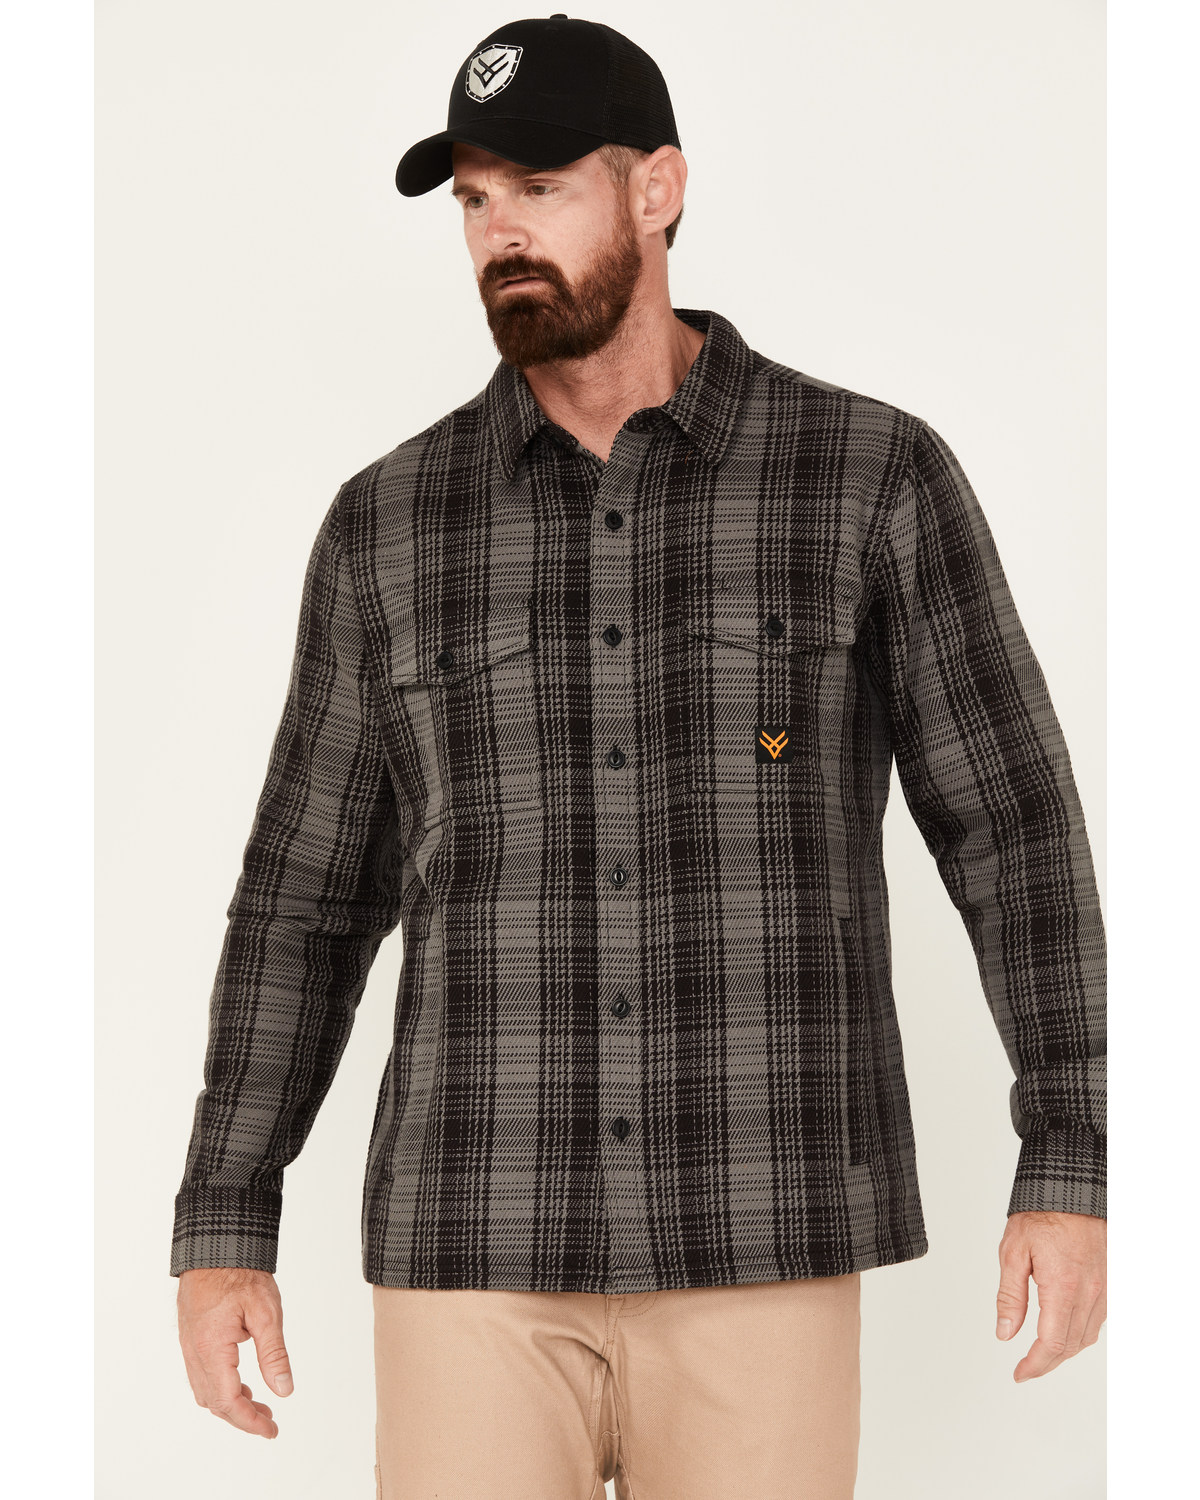 Hawx Men's Brawny Flannel Work Shirt